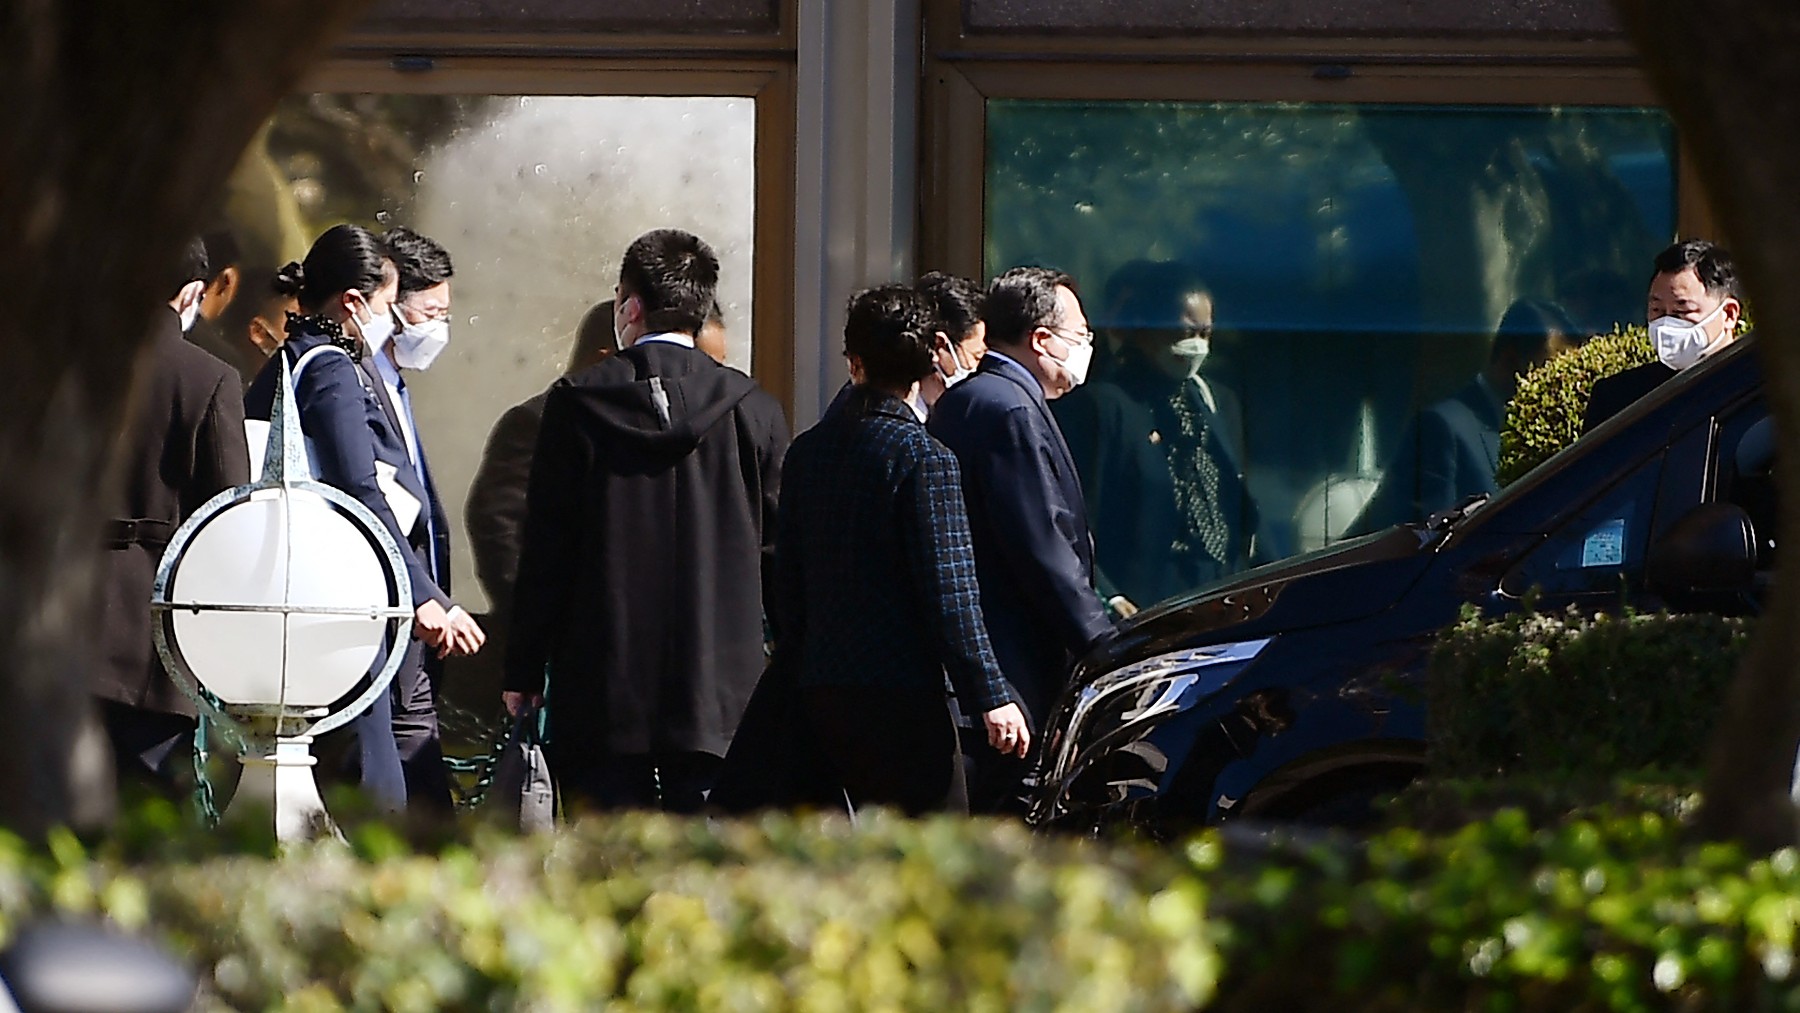 La delegación china llega la cumbre de Roma con EEUU (AFP)